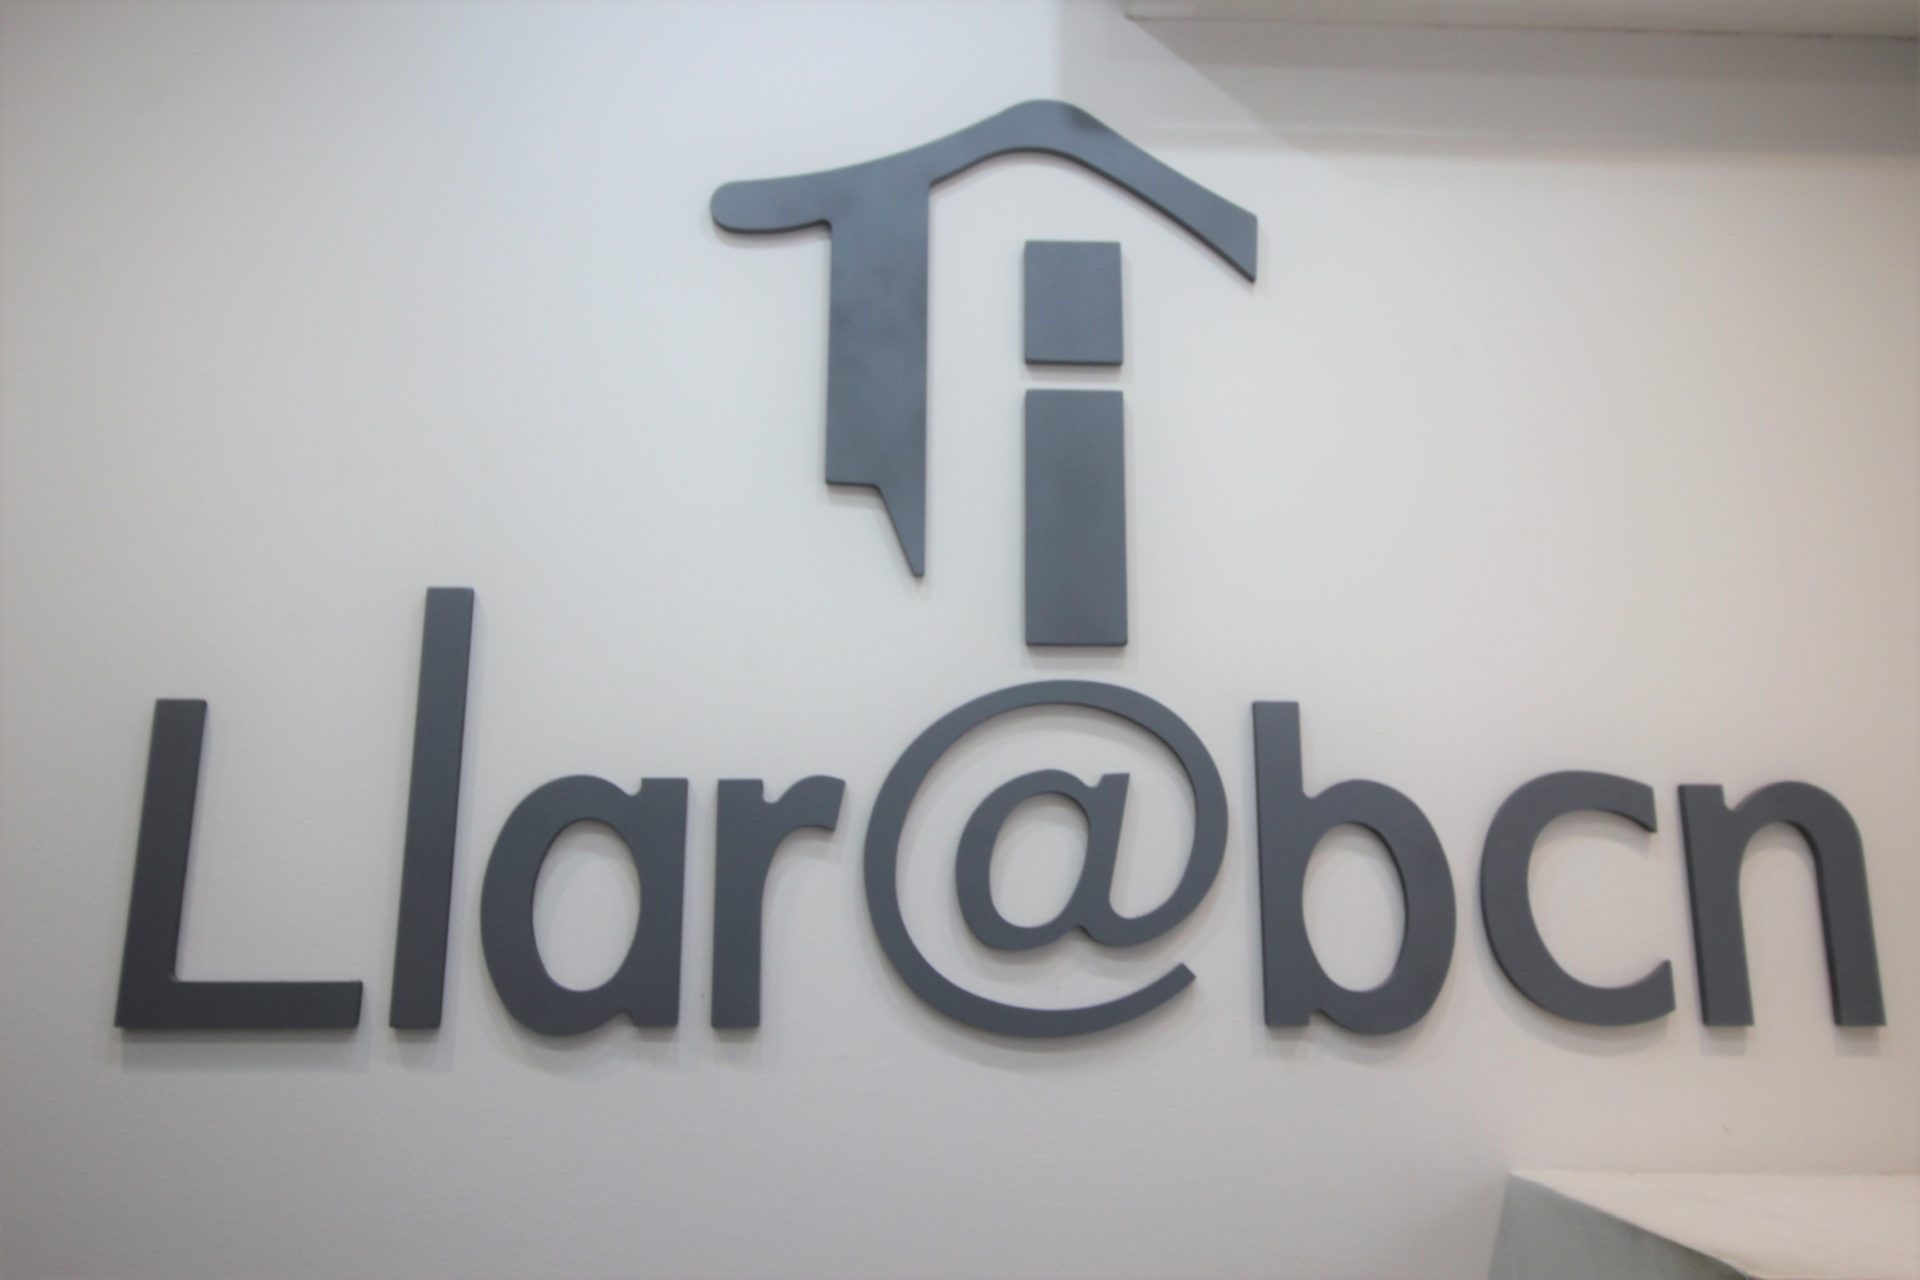 (c) Llarbcn.es